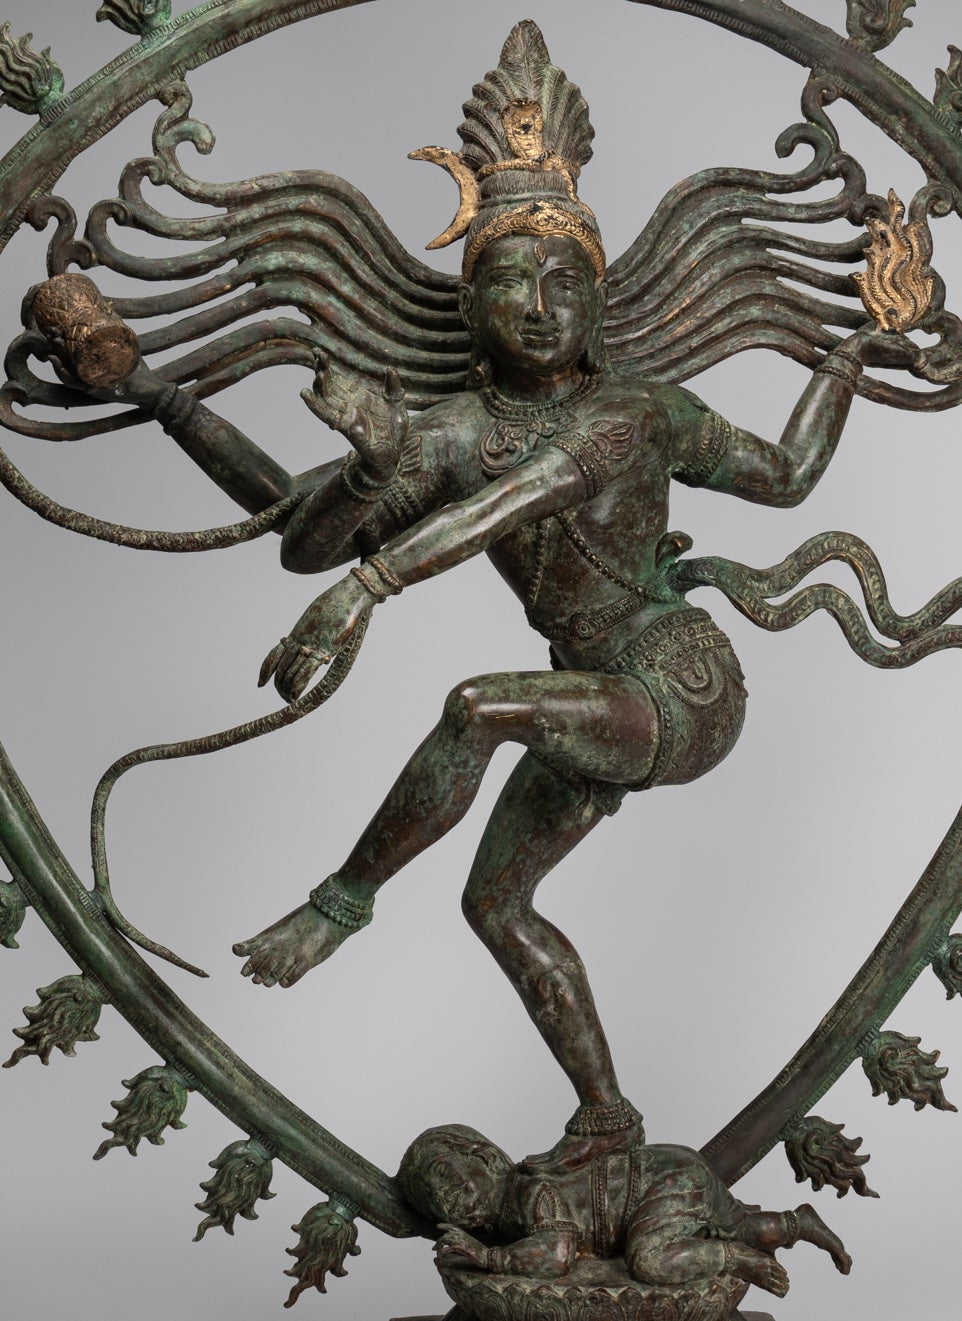 Nataraja: Shiva as the Cosmic Dancer